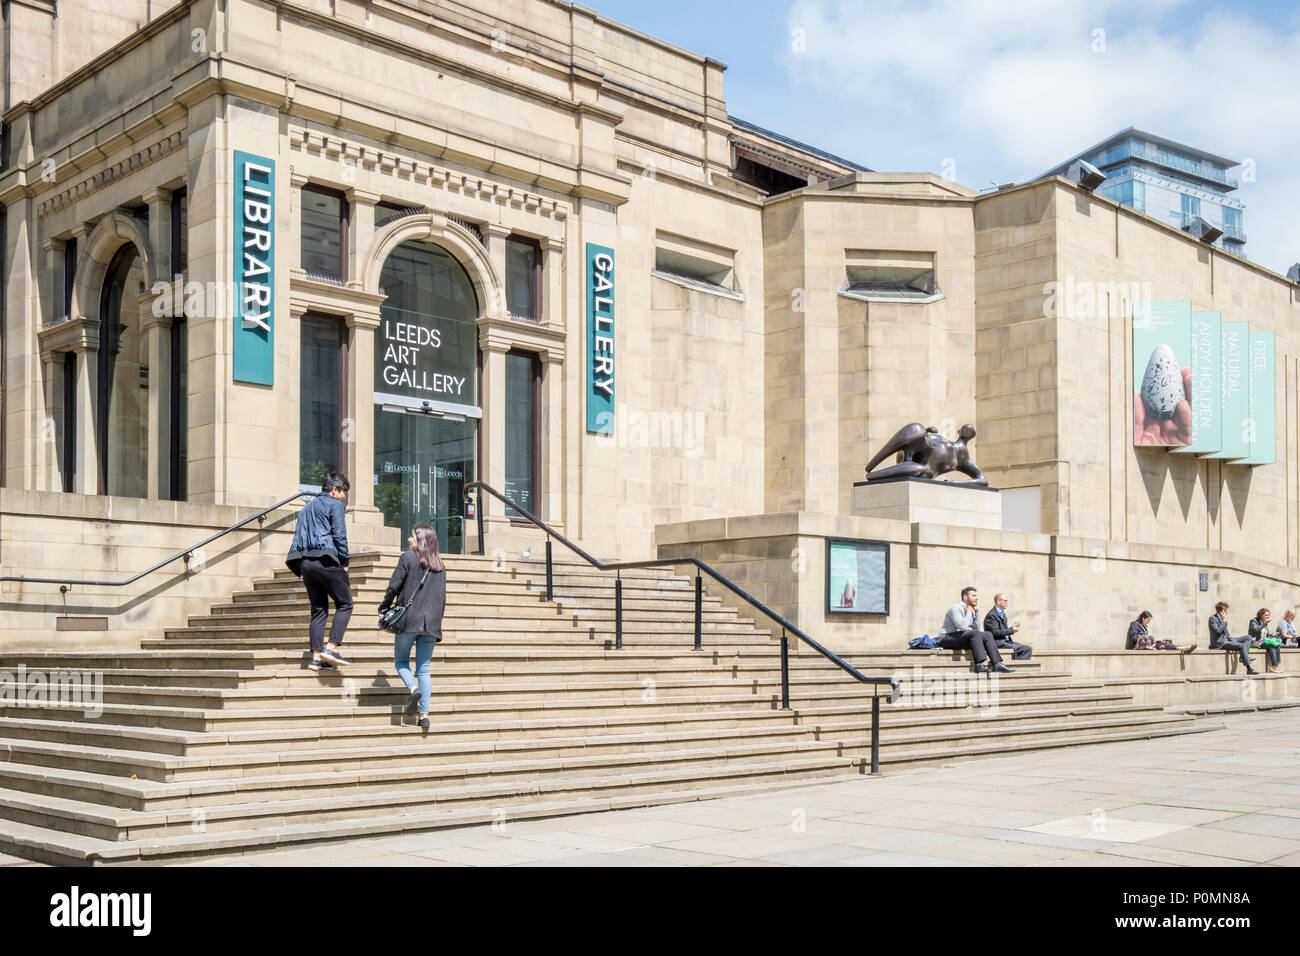 Bibliothèque centrale de Leeds et de Leeds Art Gallery, Leeds, West Yorkshire, England, UK Banque D'Images